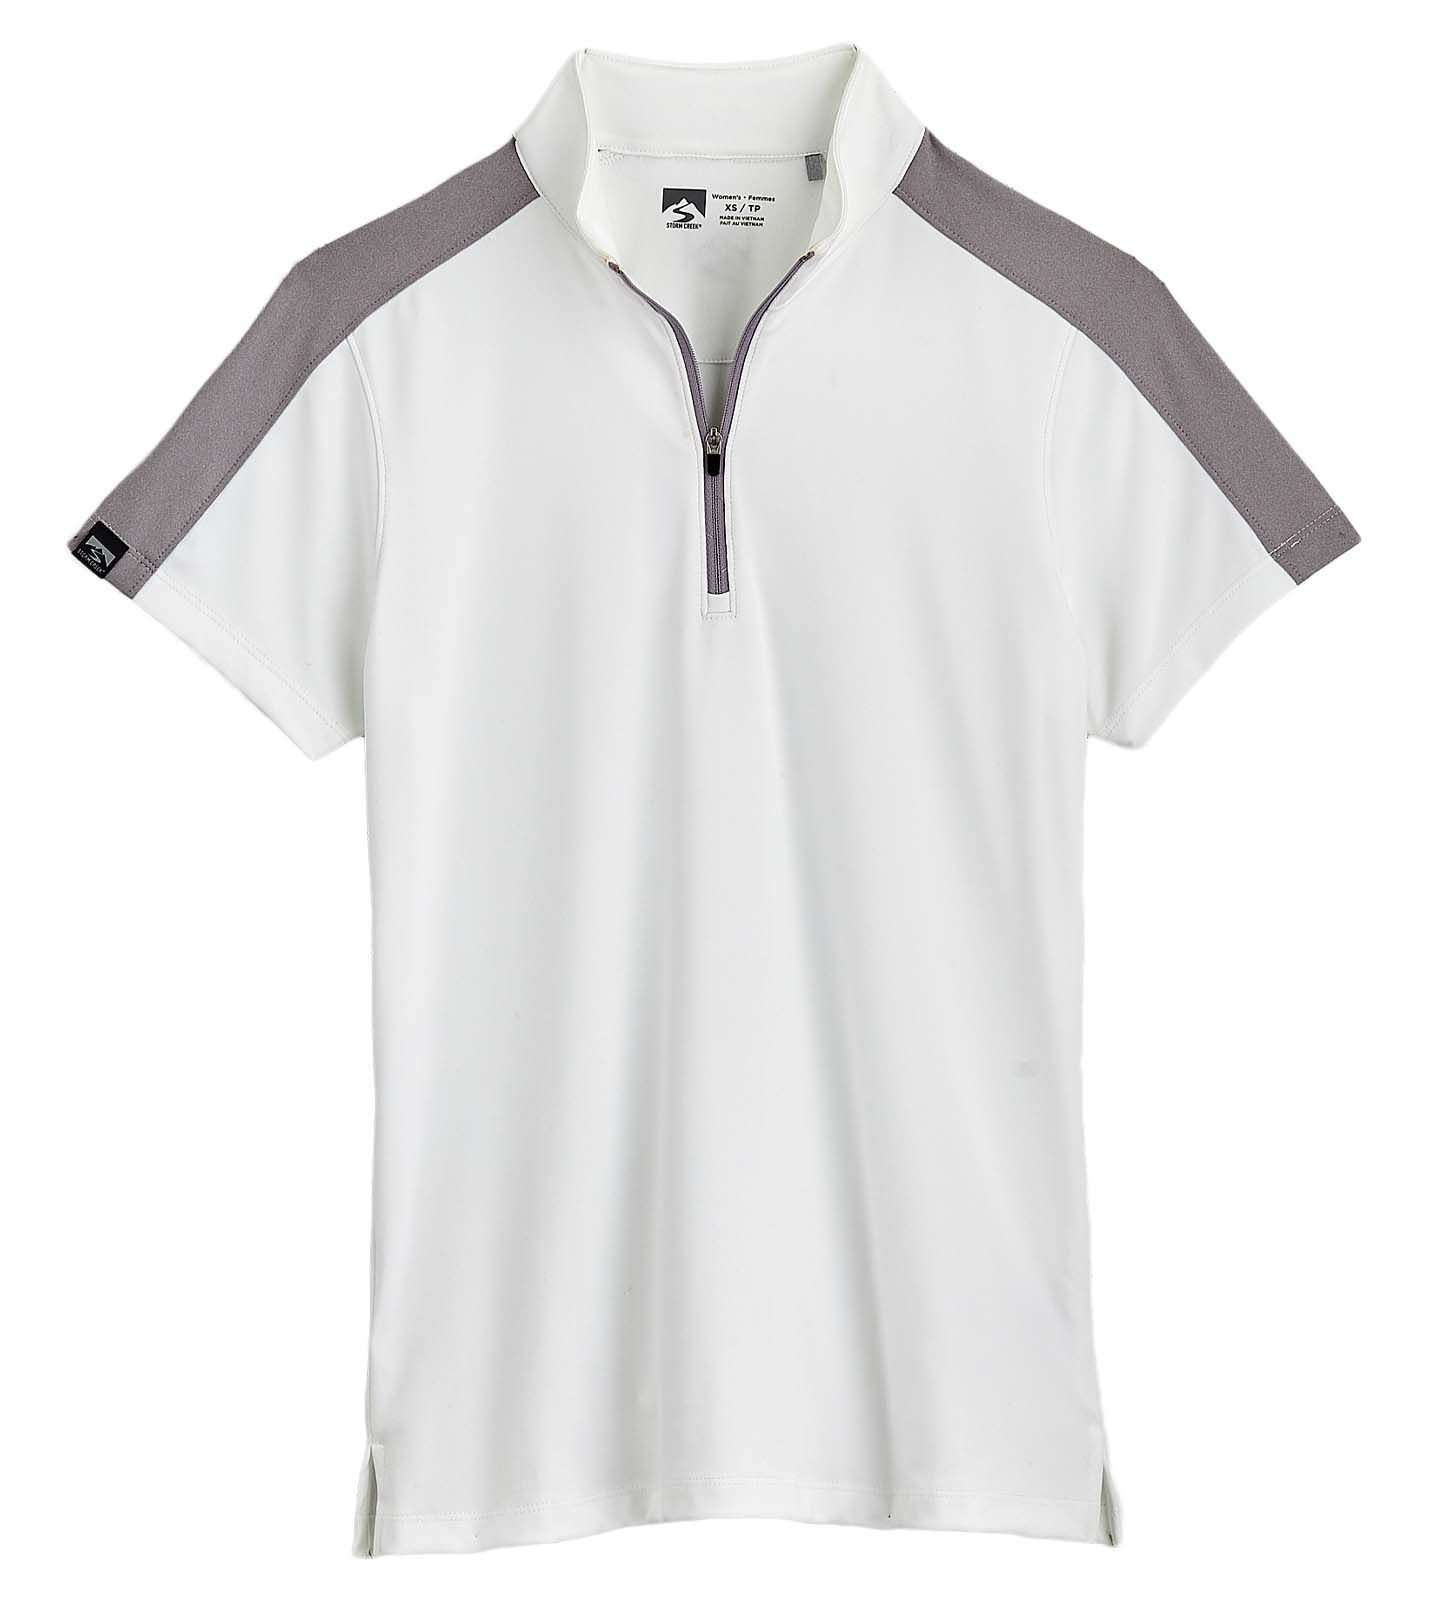 Storm Creek Activator Short-Sleeve Polo Shirt for Ladies - Dark Heather Gray/Black - White/Light Heather Gray - M